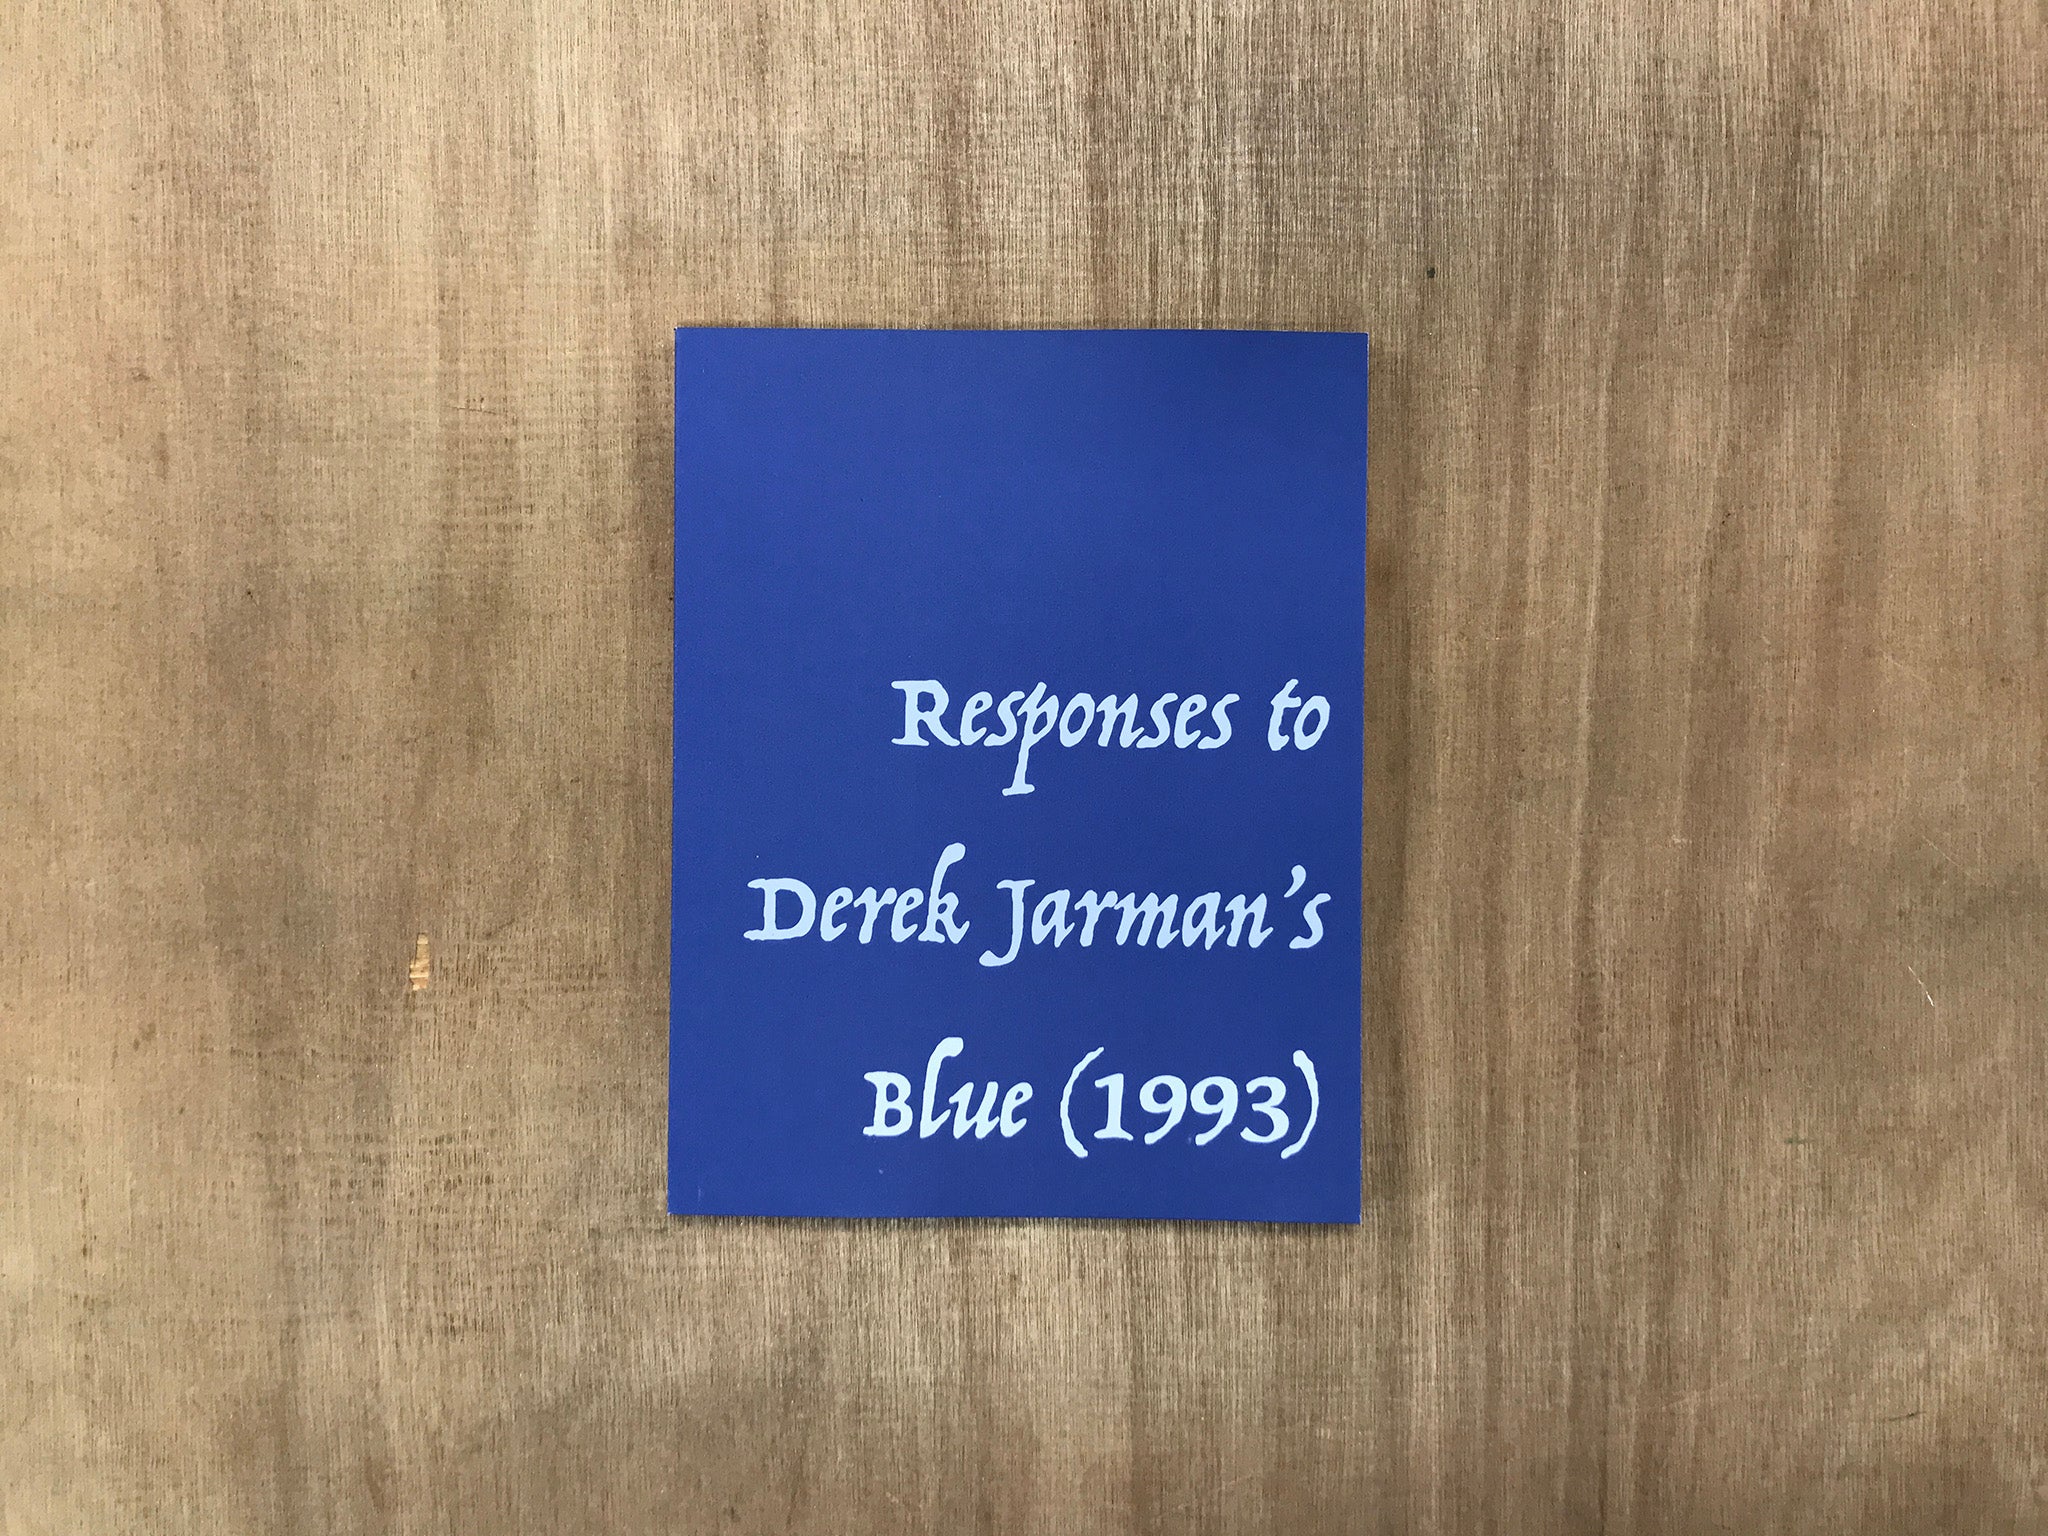 RESPONSES TO DEREK JARMAN'S BLUE (1993) by Various Artists